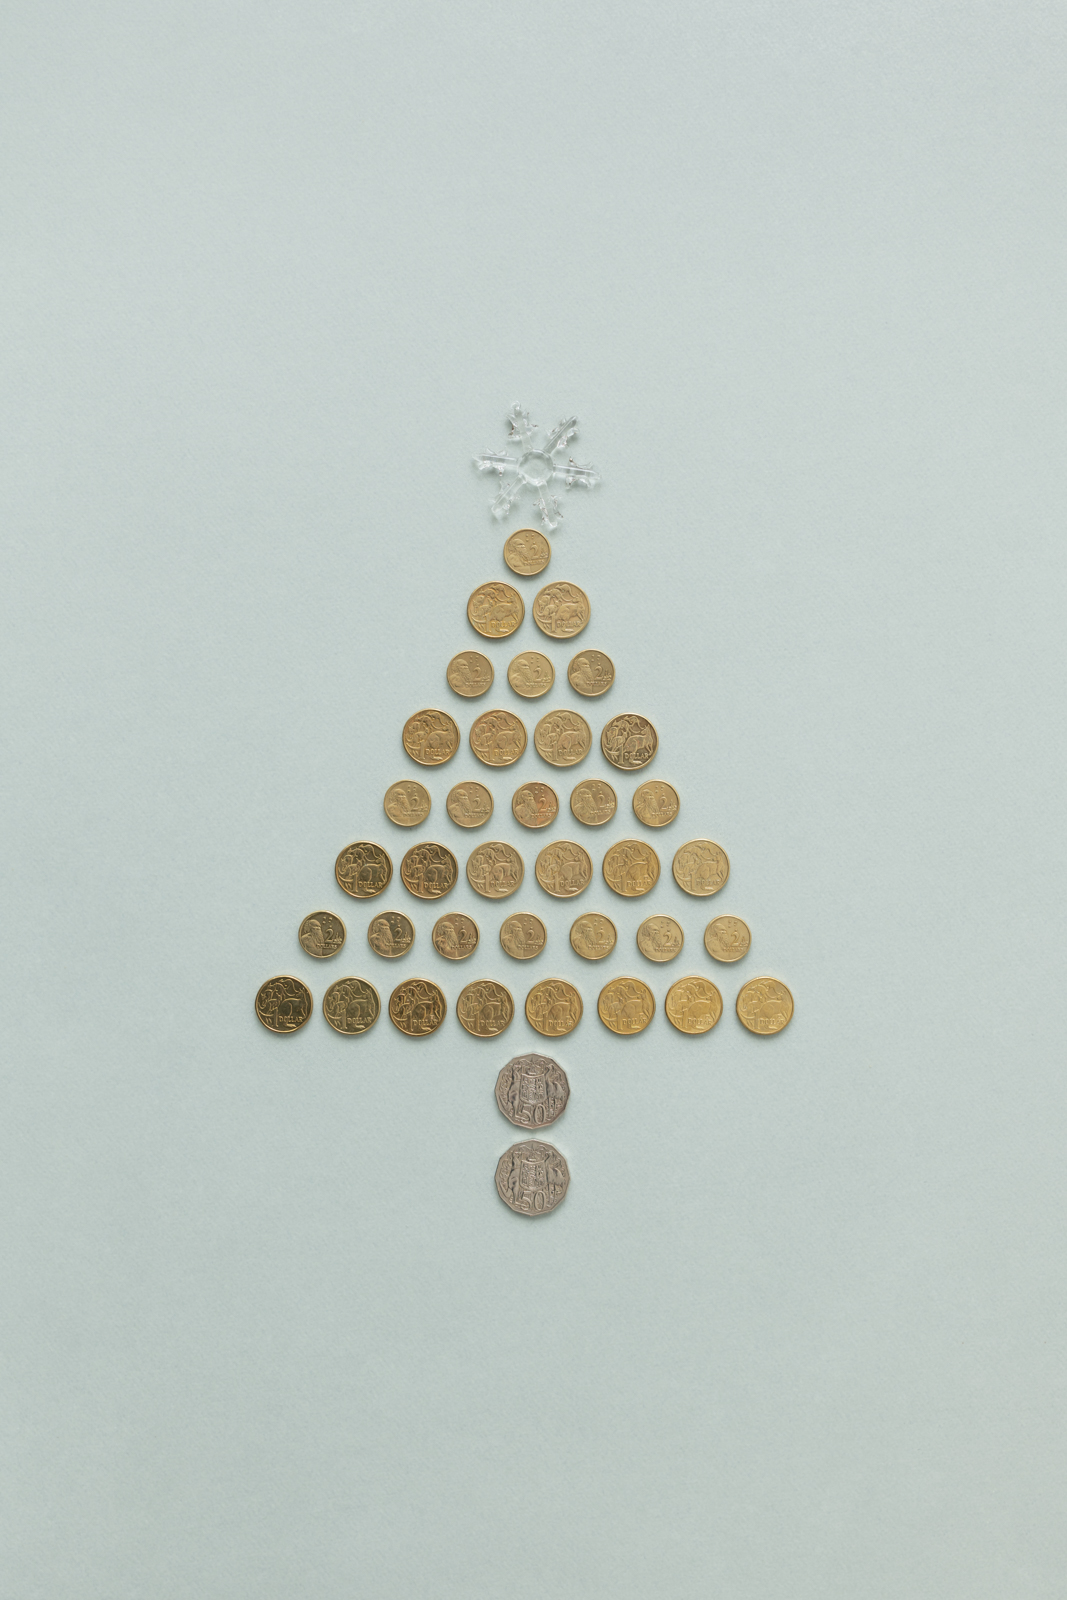 Christmas, money, tree, australian, australia, stock, image, photo, picture, Financial, Finance